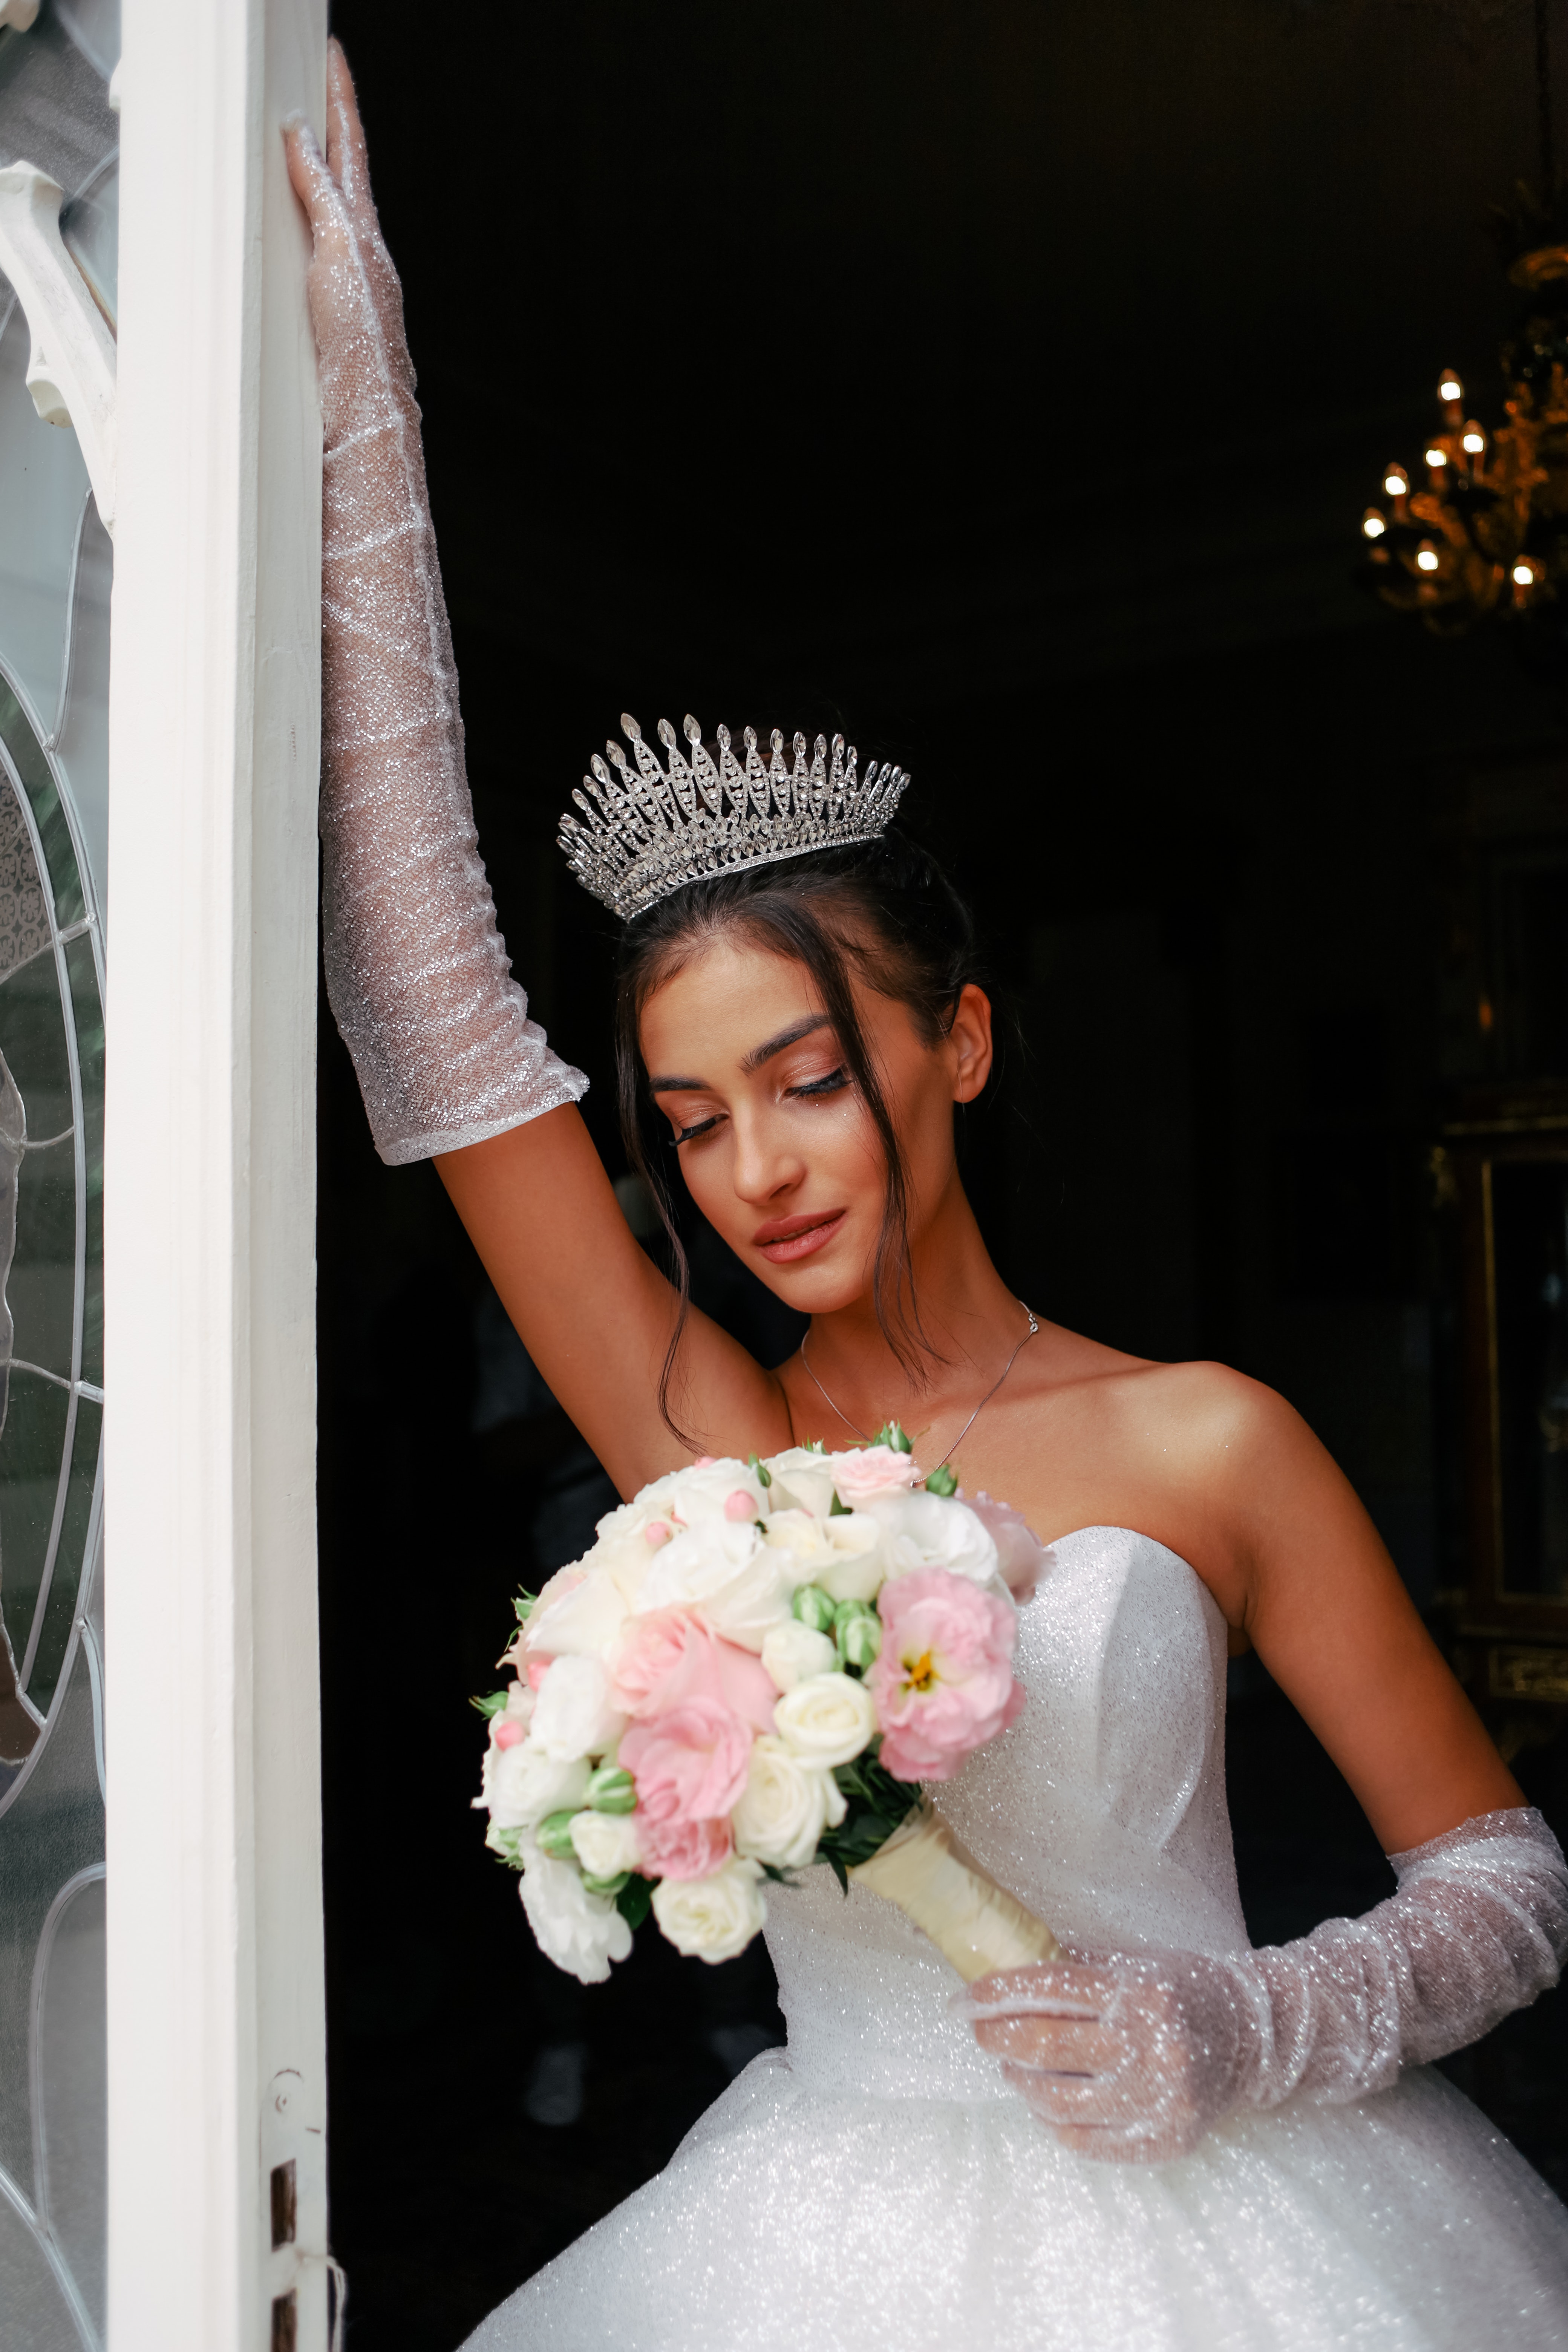 Brunette bride in white bustier dress and gloves posing in a doorway | Source: Pexels